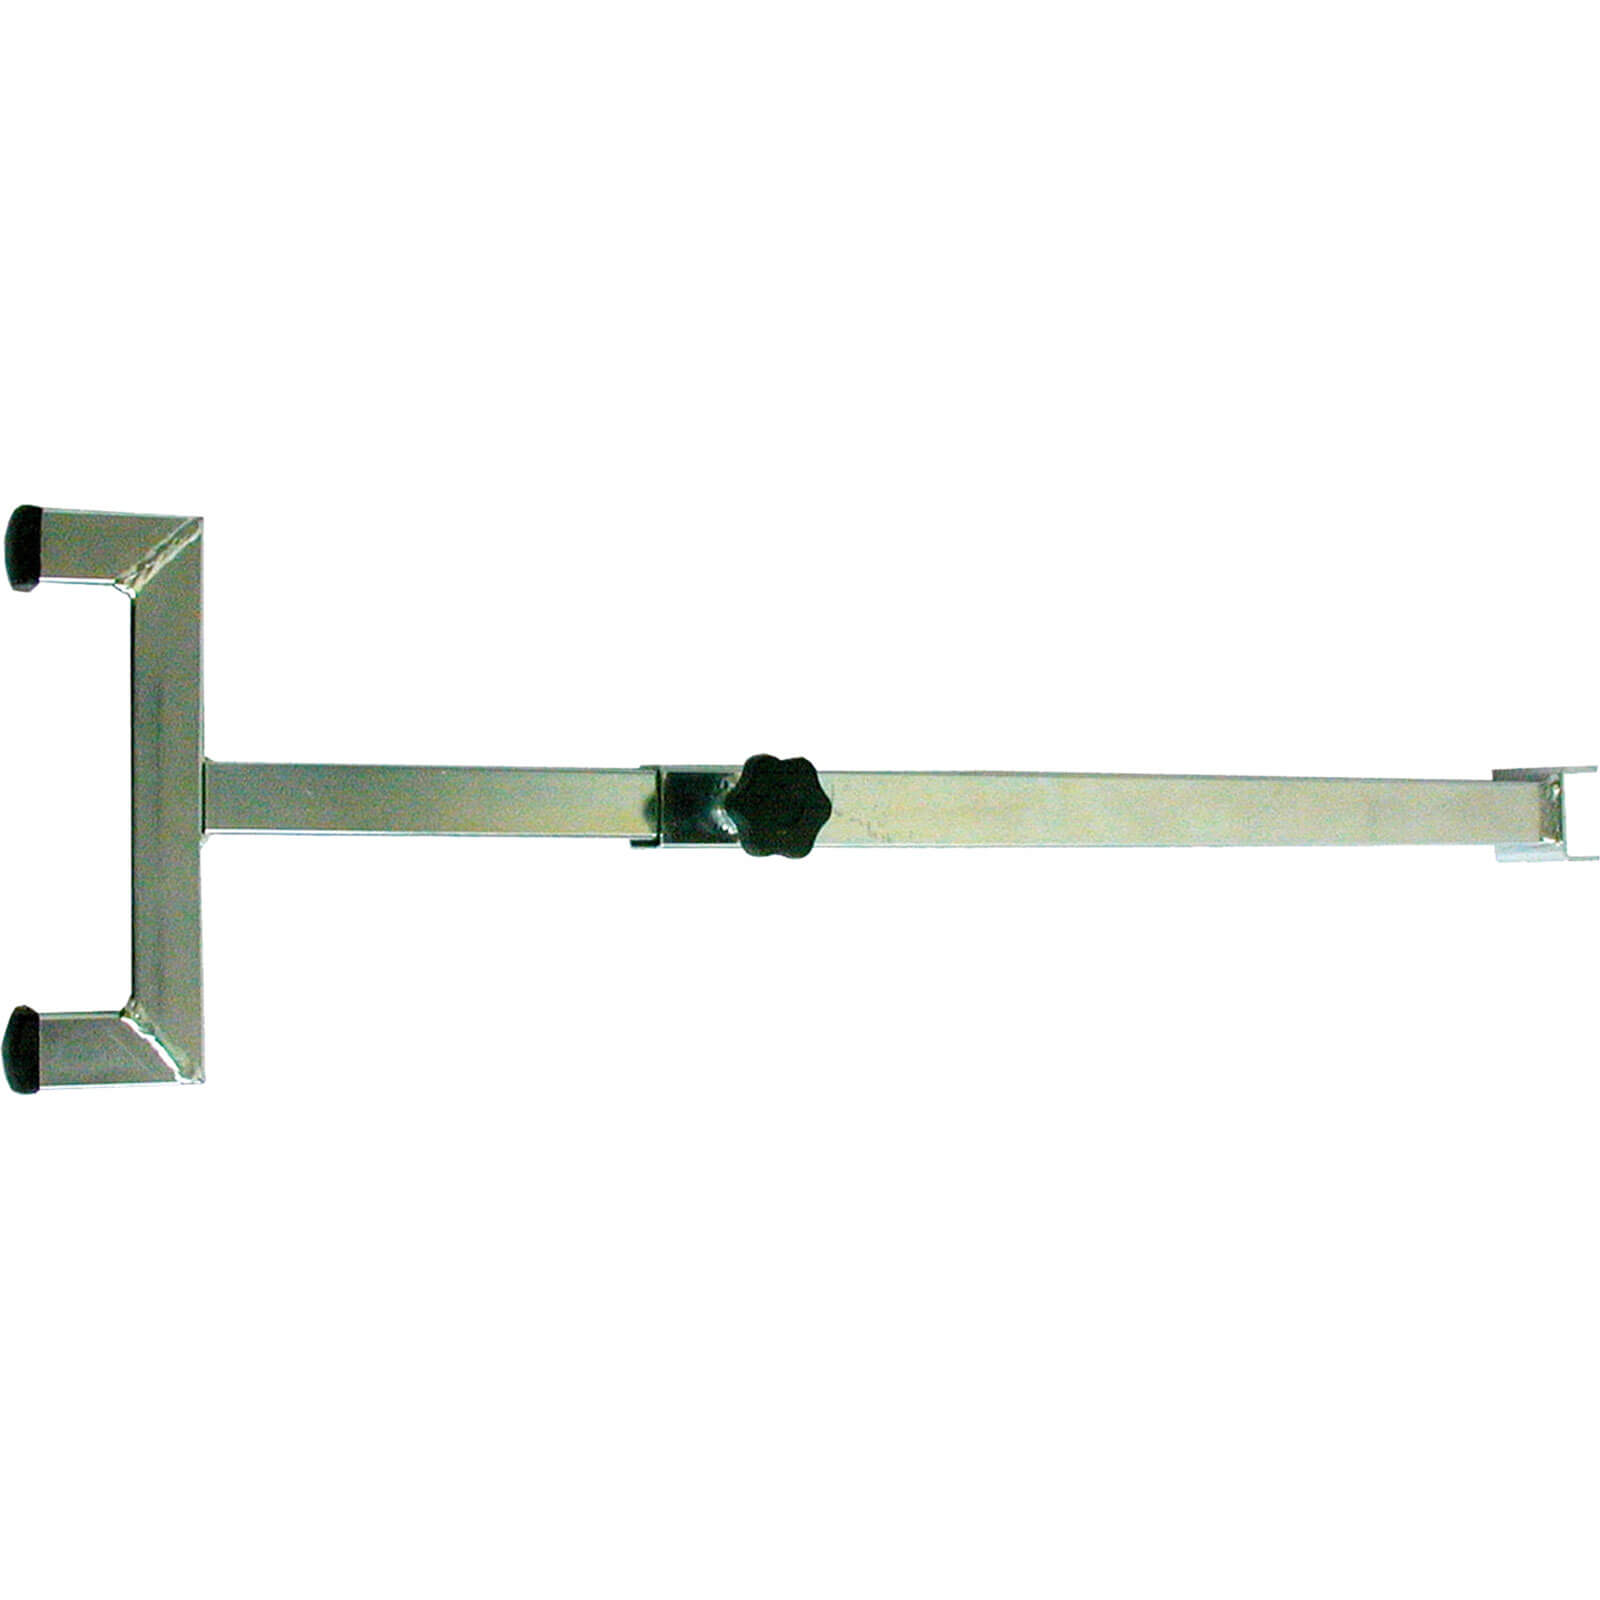 DeWalt DE7028 Extension Support Arm for Universal Mitre Saw Stand